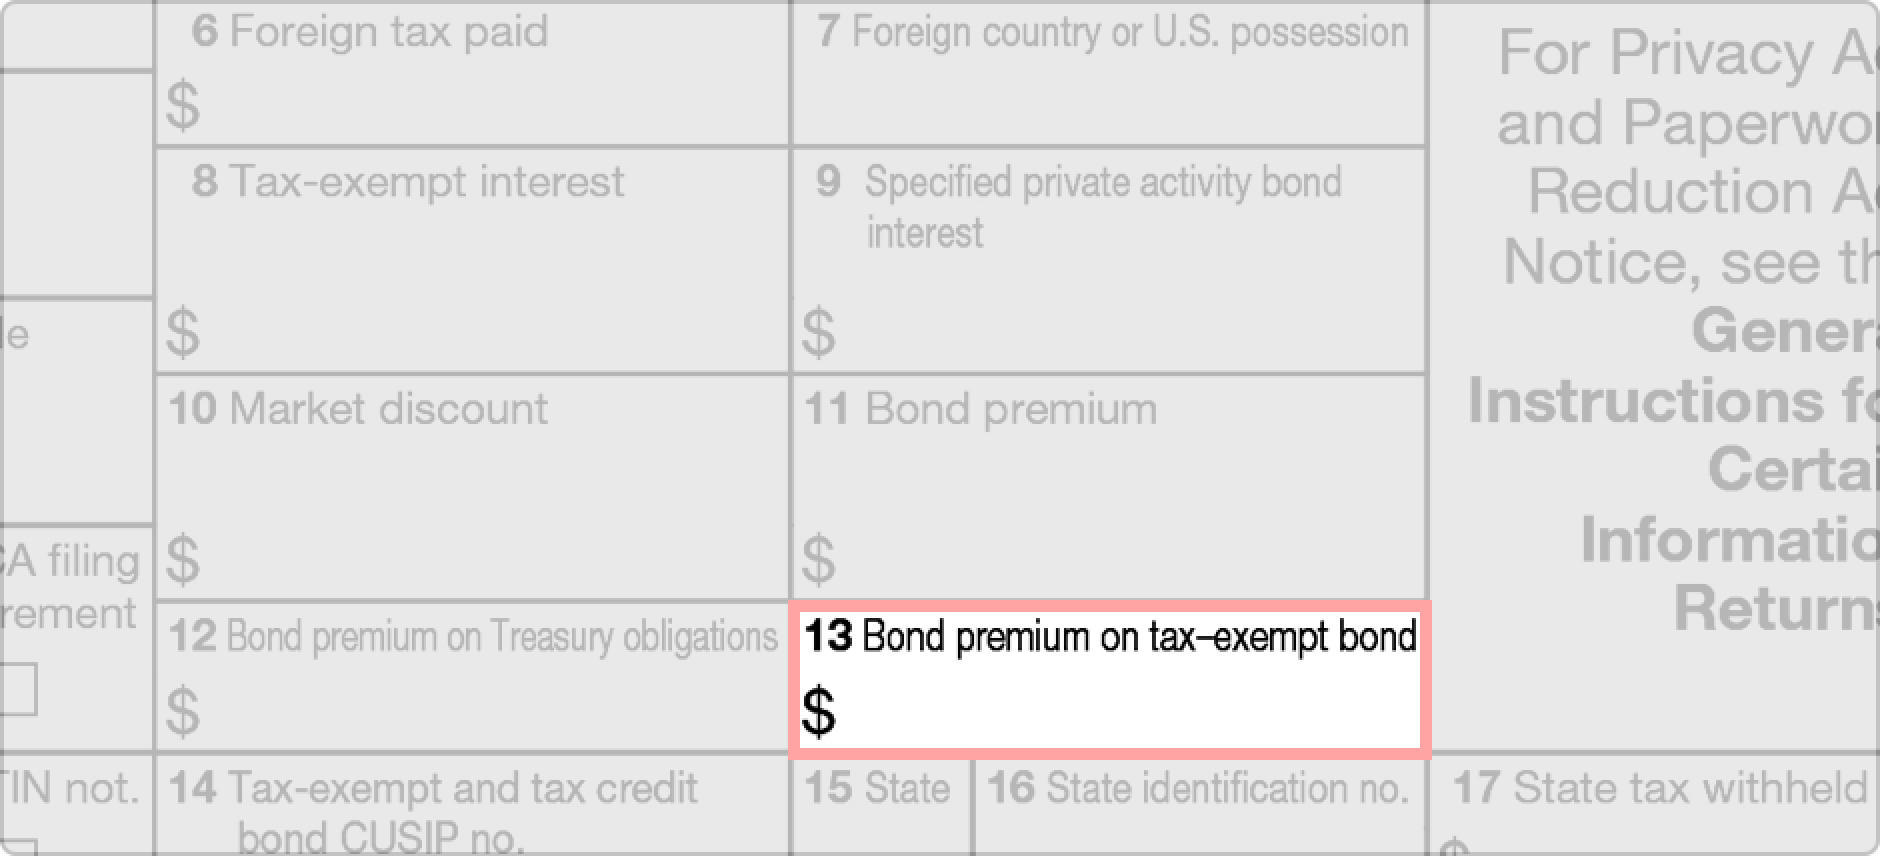 Bond Premium on Tax-Exempt Bond